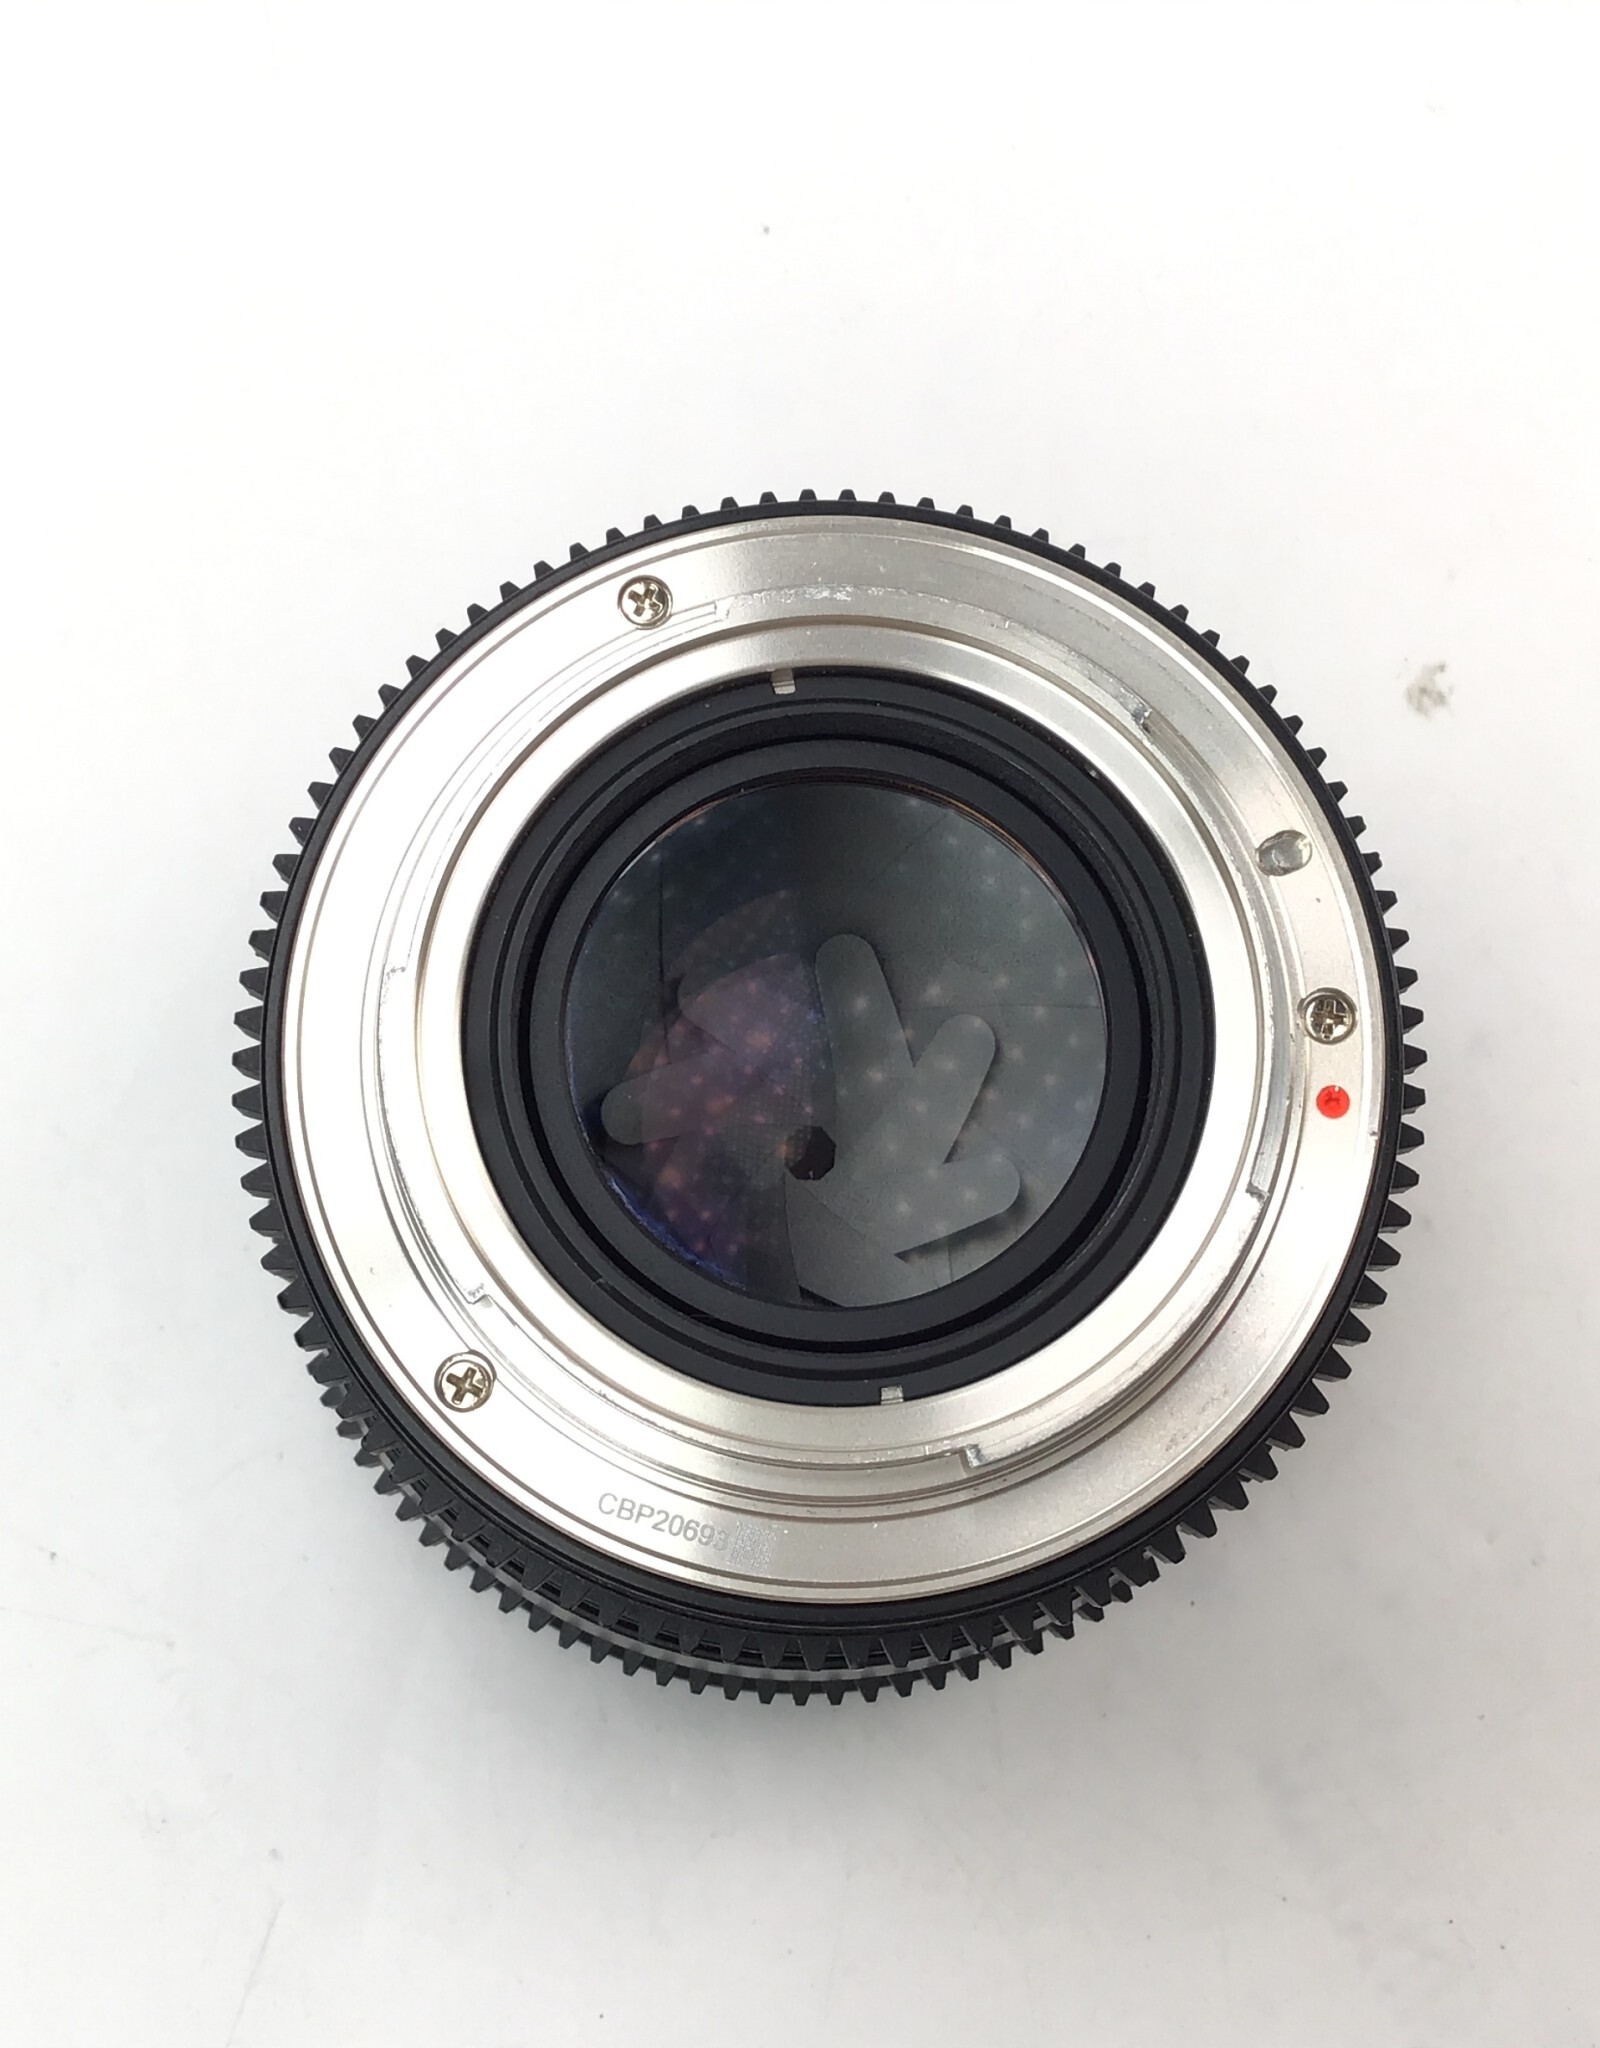 ROKINON Rokinon 50mm T1.5 AS UMC Cinema Lens for Canon EF Used Good